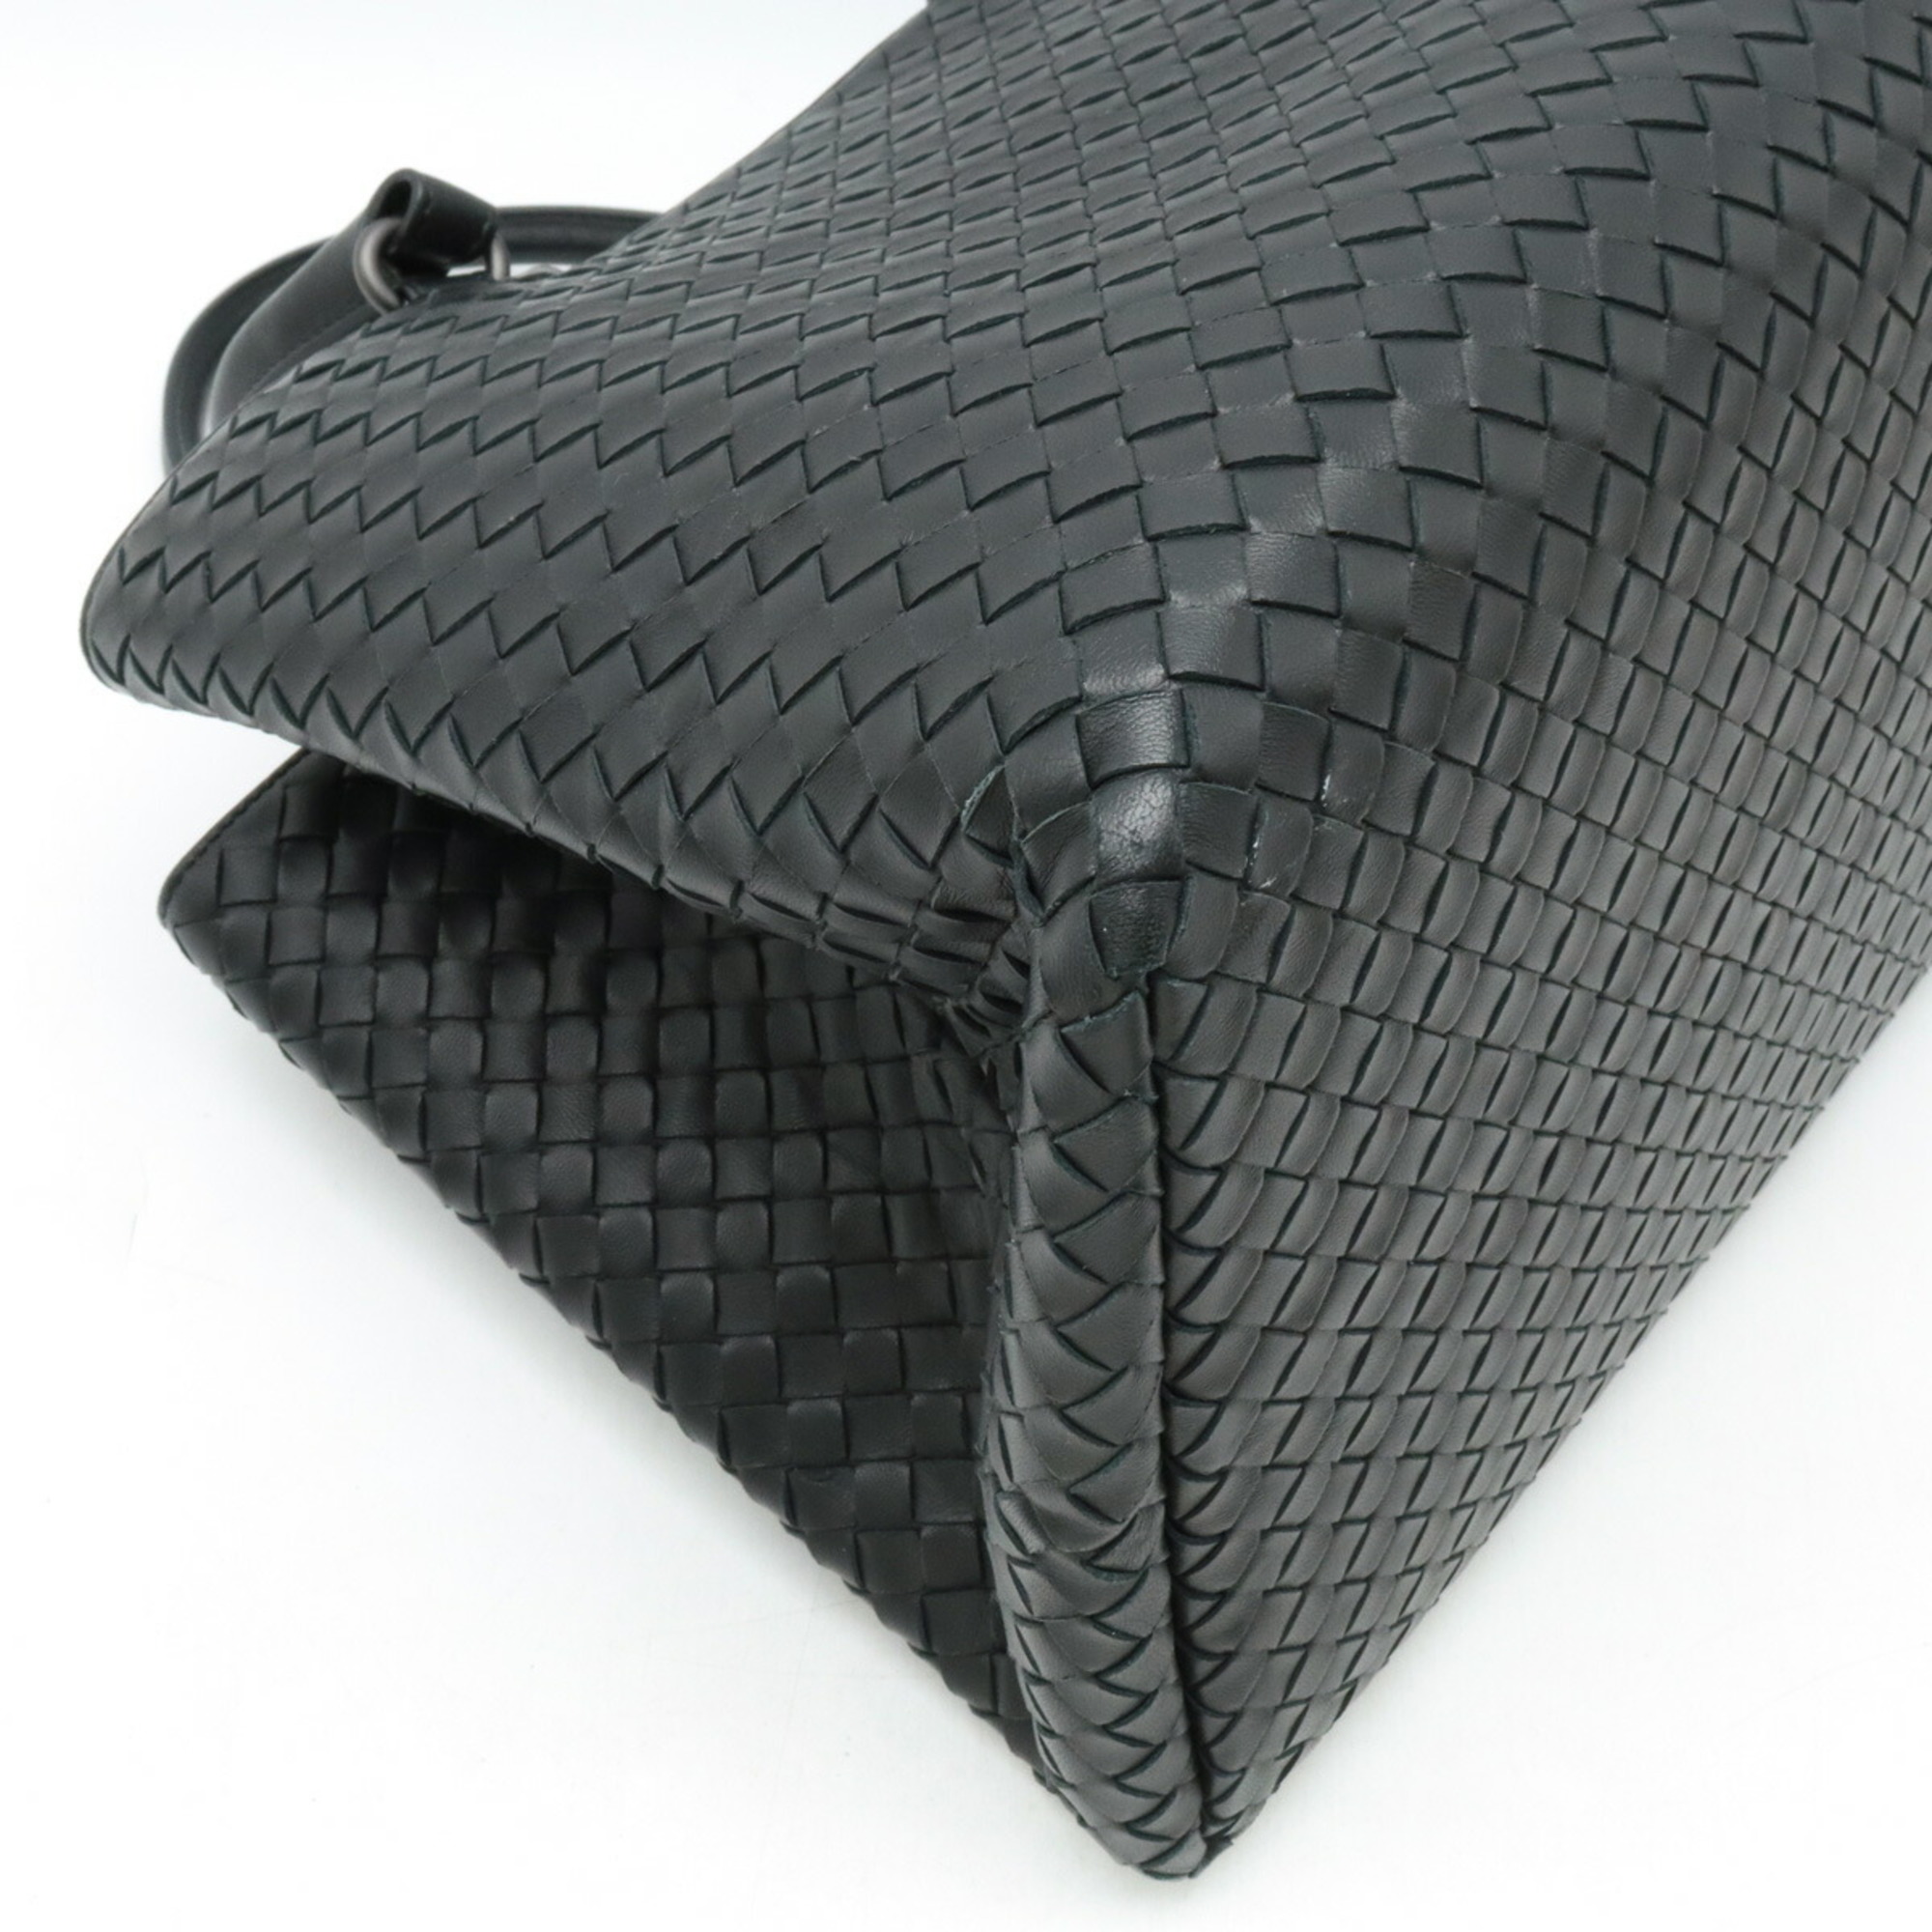 BOTTEGA VENETA Bottega Veneta Intrecciato Tote Bag Handbag Leather Black 223377